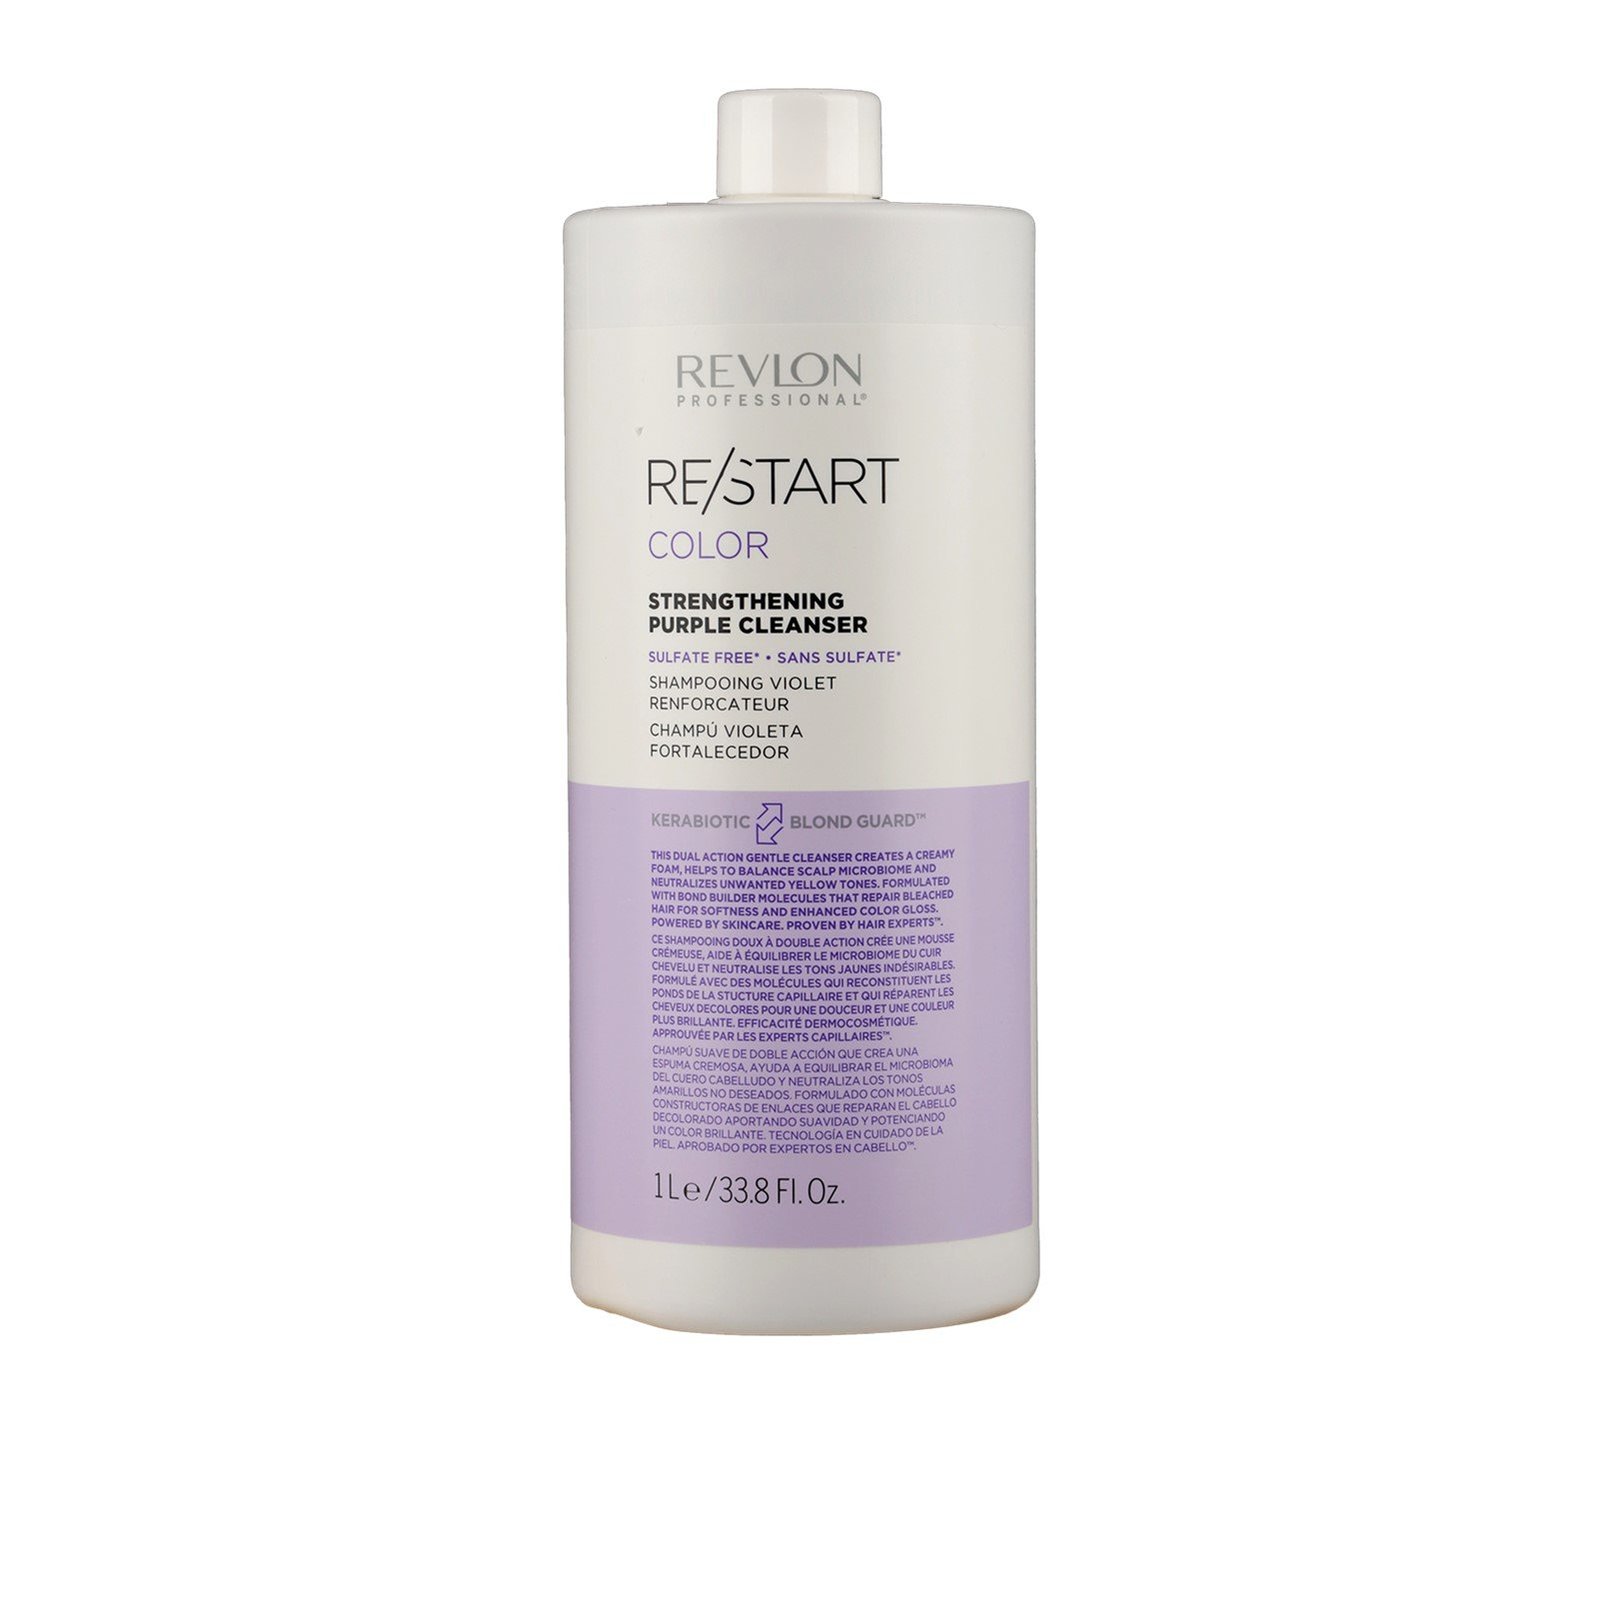 Revlon Professional Re/Start Color Strengthening Purple Cleanser Shampoo 1L (33.8 fl oz)